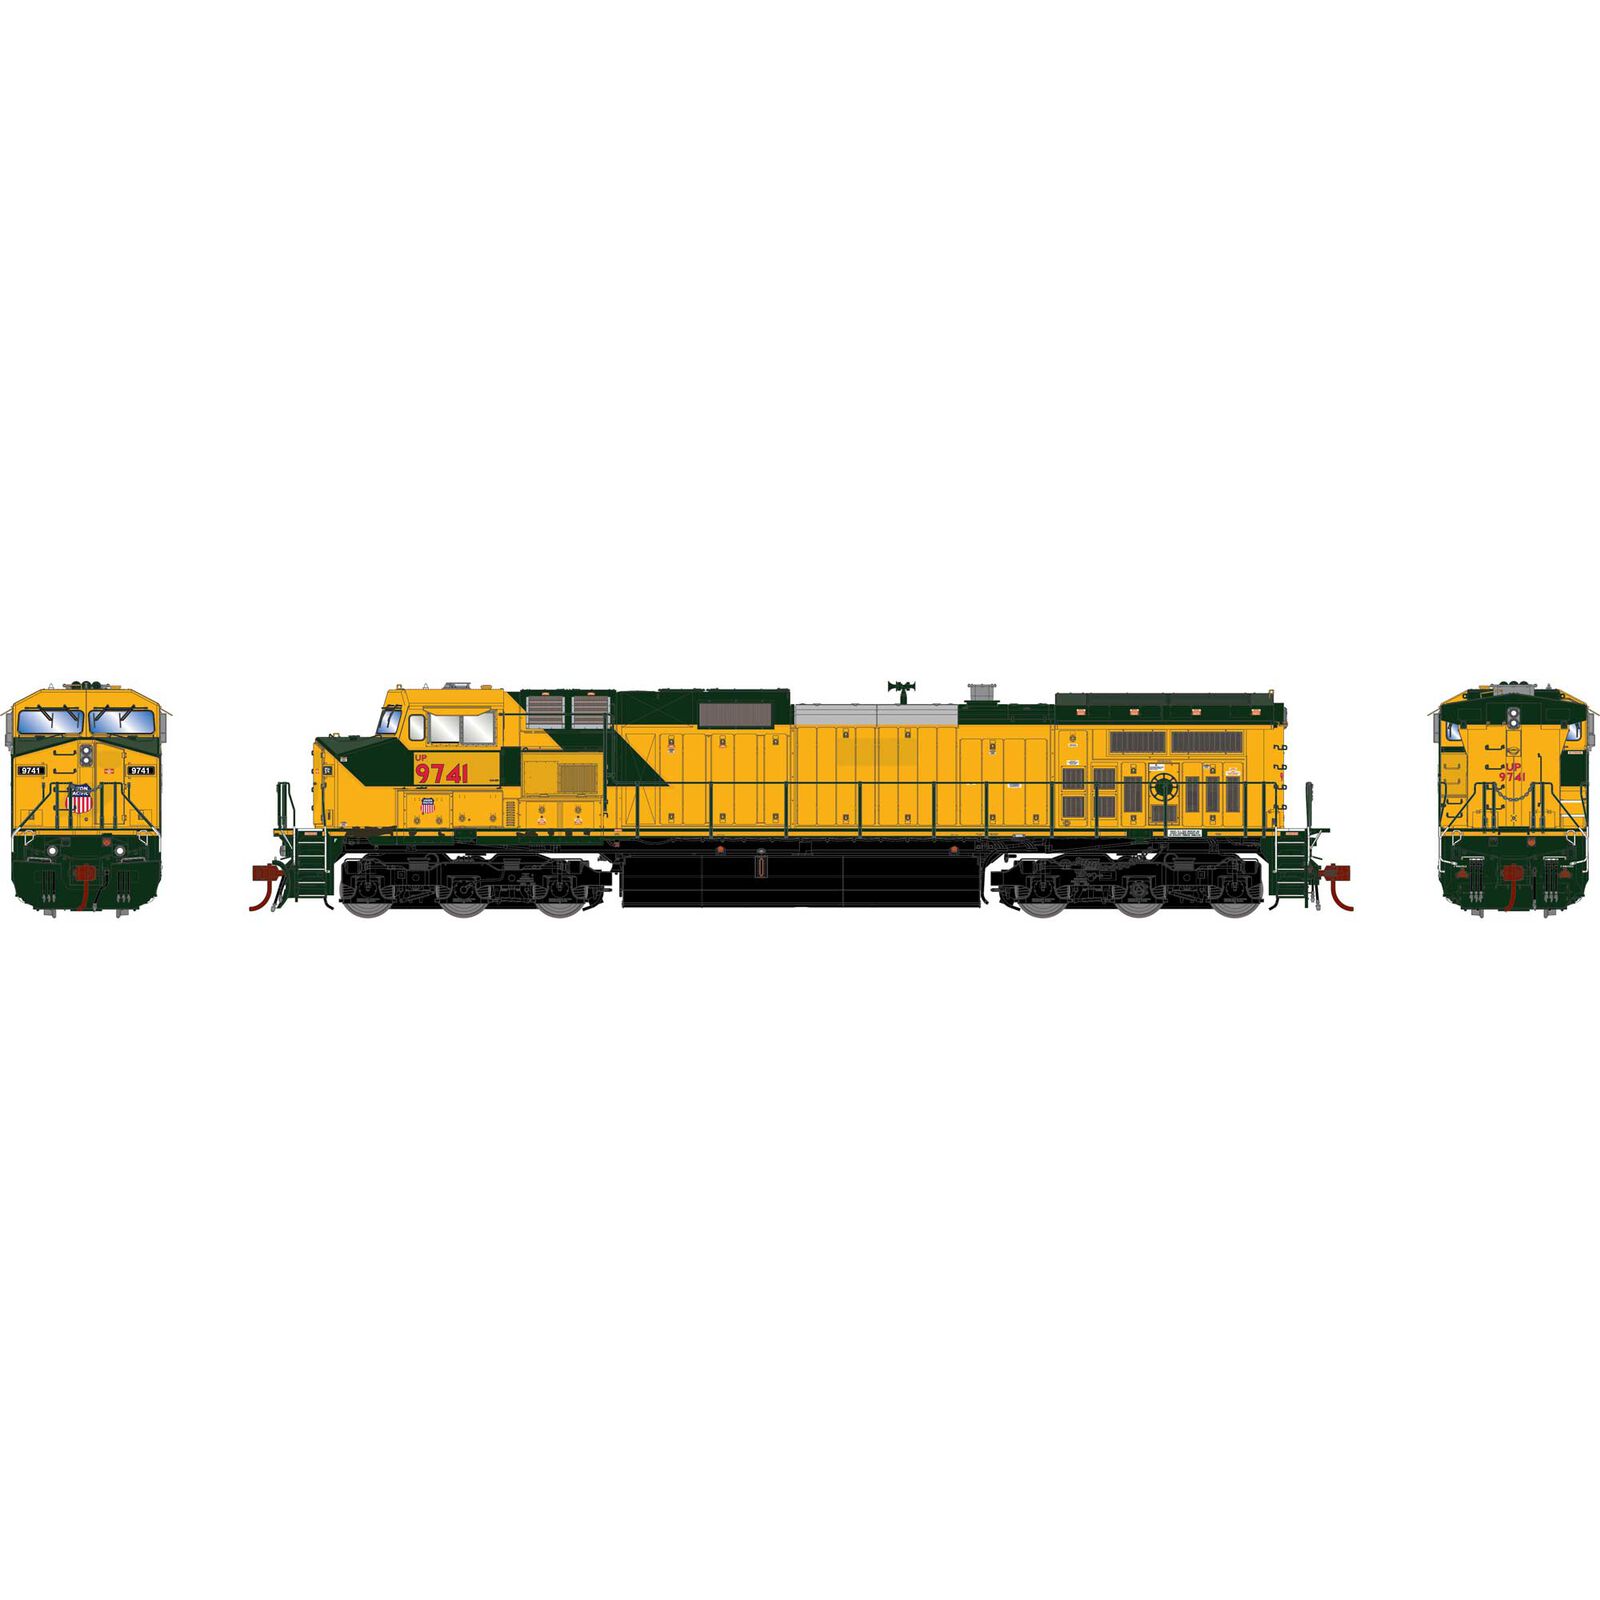 HO Dash 9-44CW Locomotive with DCC & Sound, UP #9741